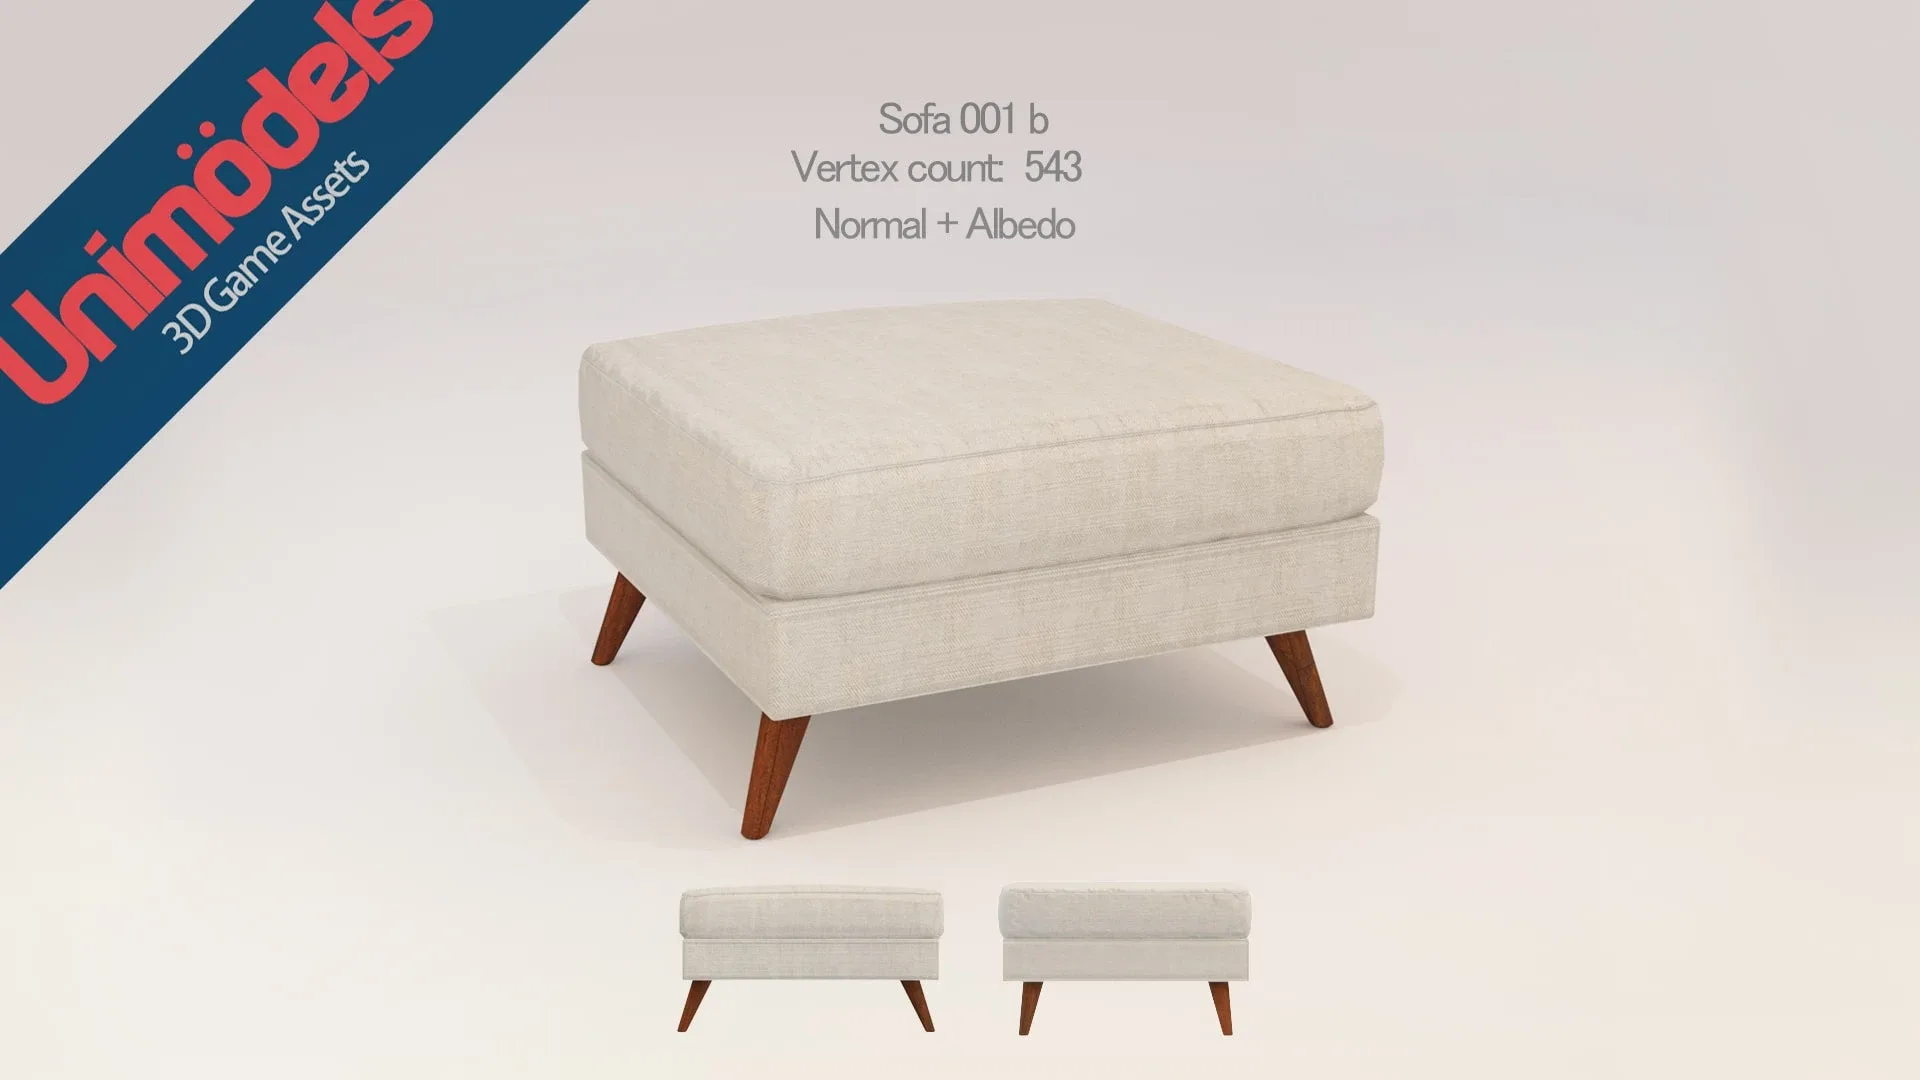 Unimodels Sofas & Pillows Vol.1 for UE4